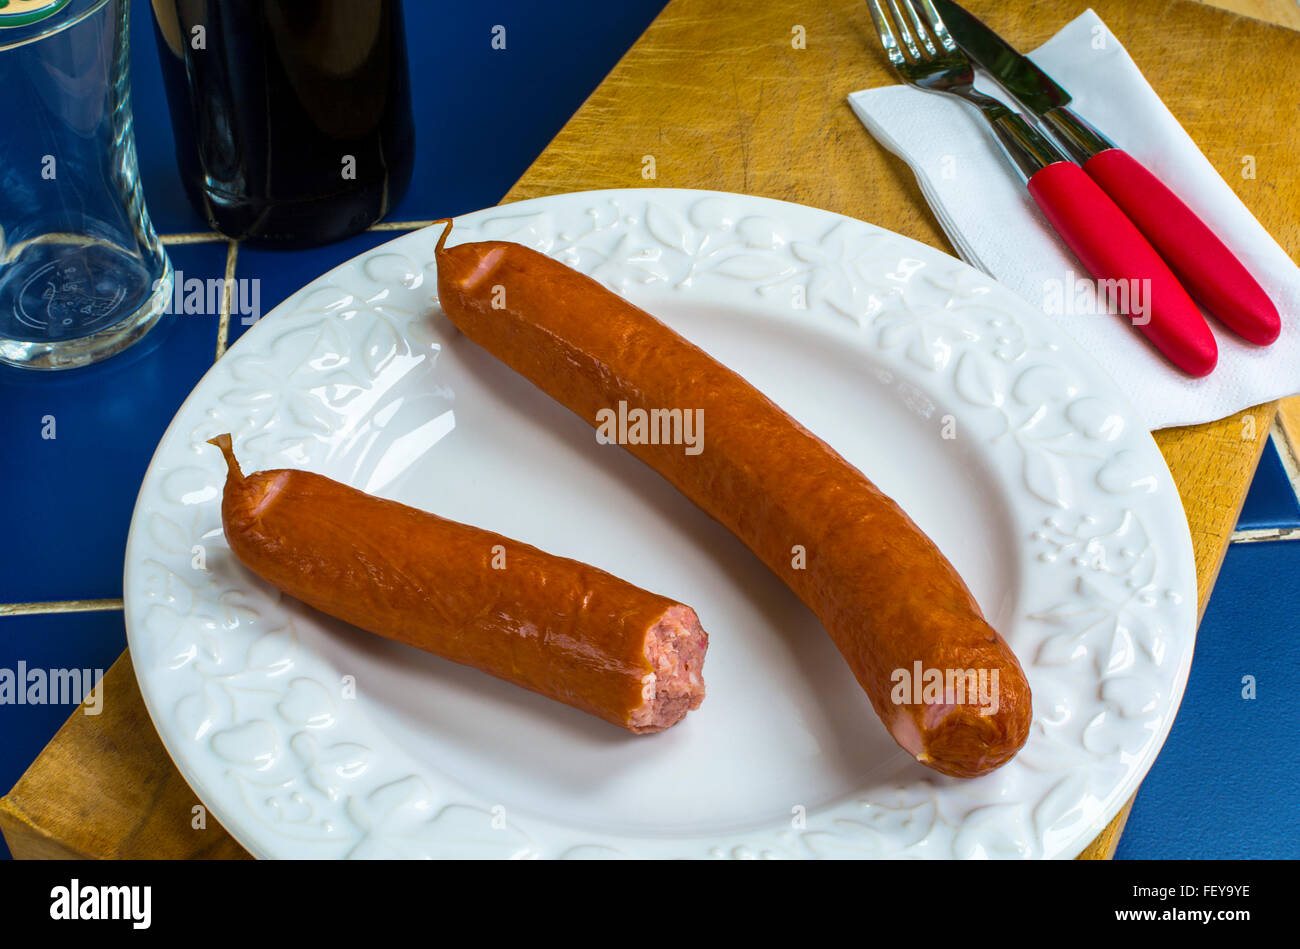 O Cabanossi cabanosy kabanossi o embutidos, similar a un leve salami, normalmente comida fría en trozos pequeños como snack Foto de stock